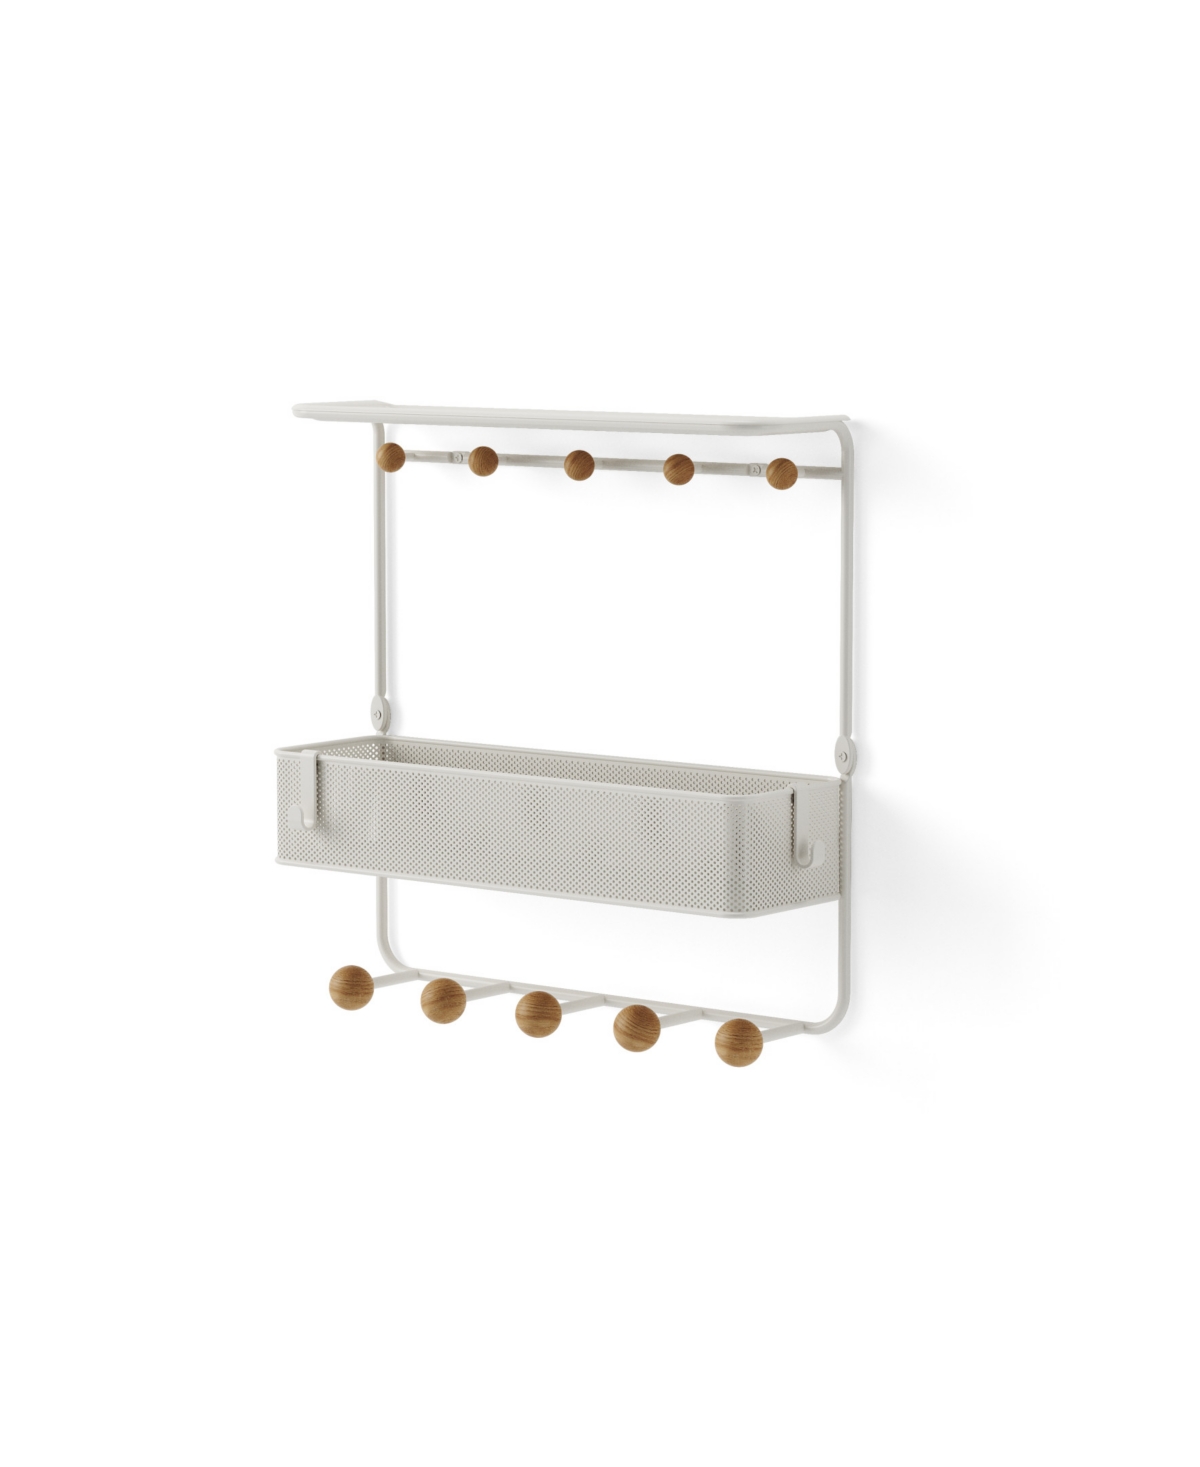 Umbra Estique Shelf With Hooks In White